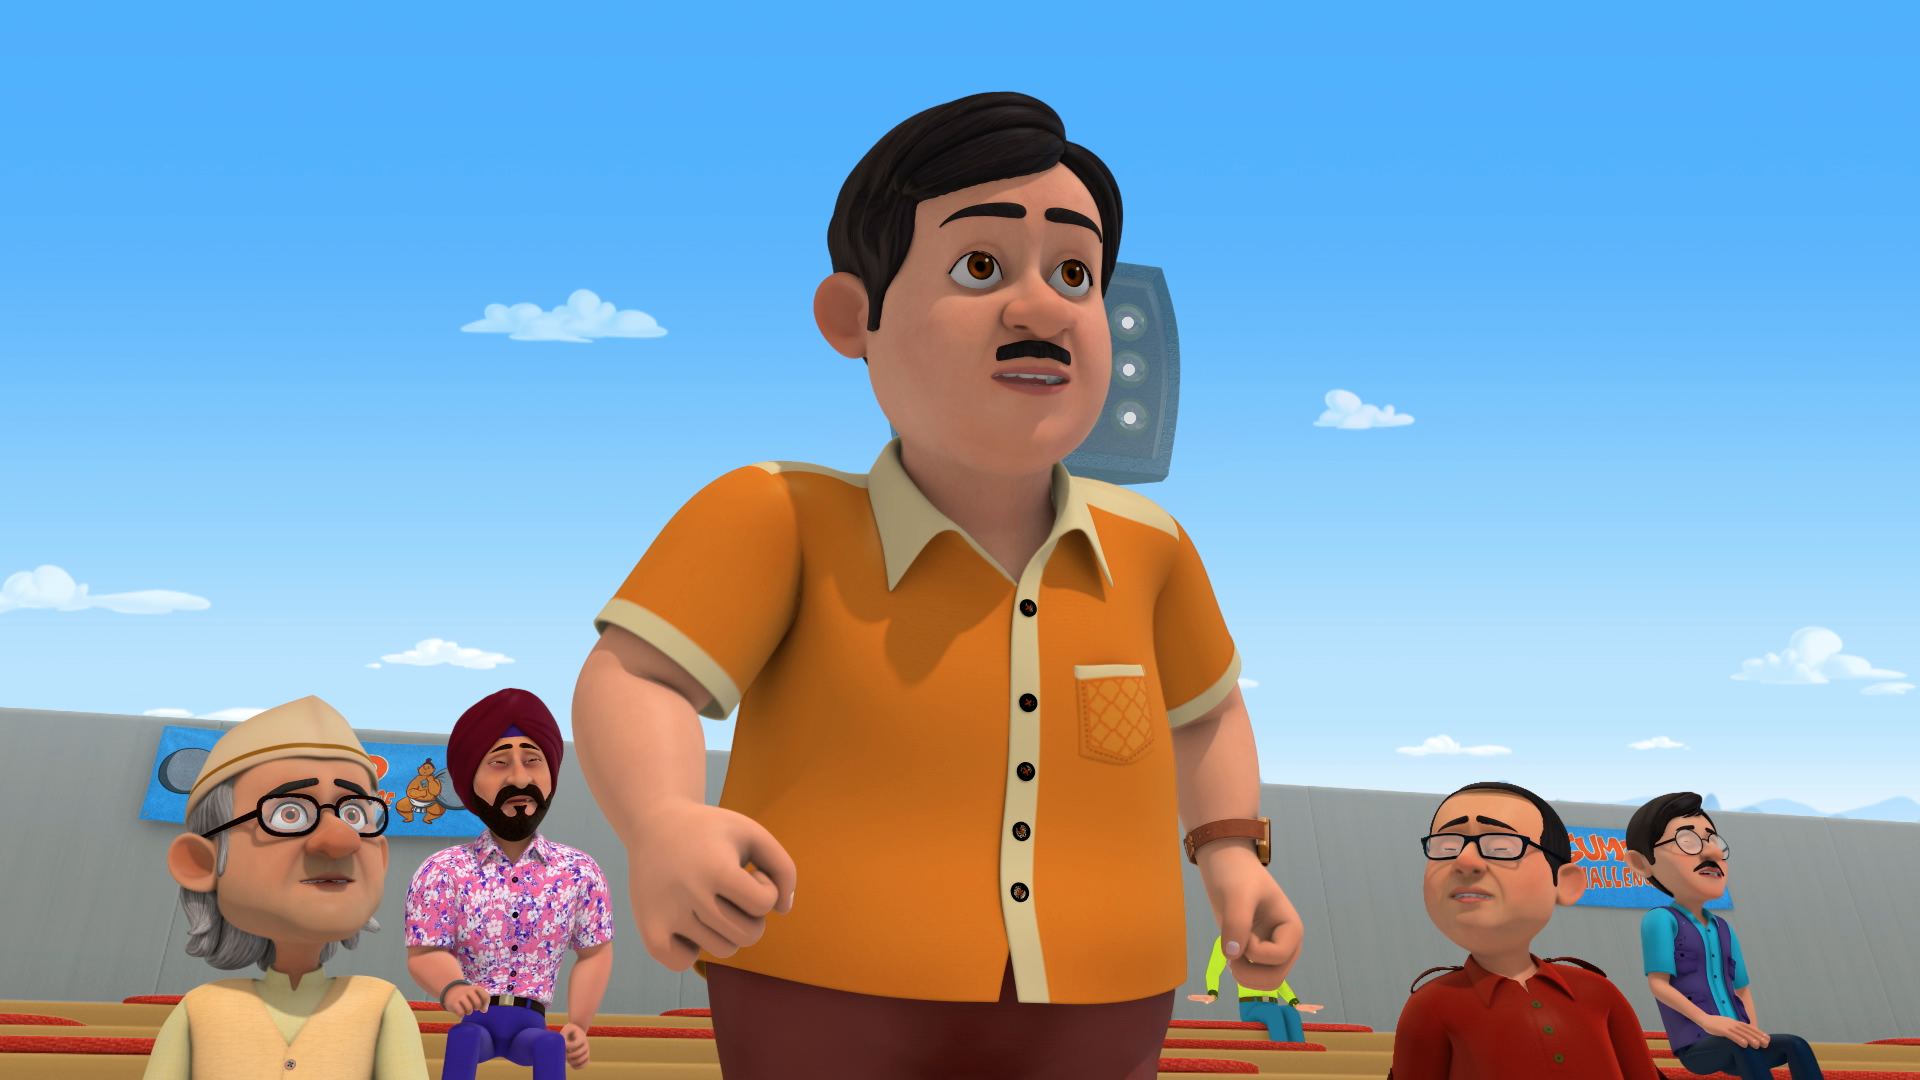 Taarak Mehta Ka Ulta Chashma | Hi-Tech Animation